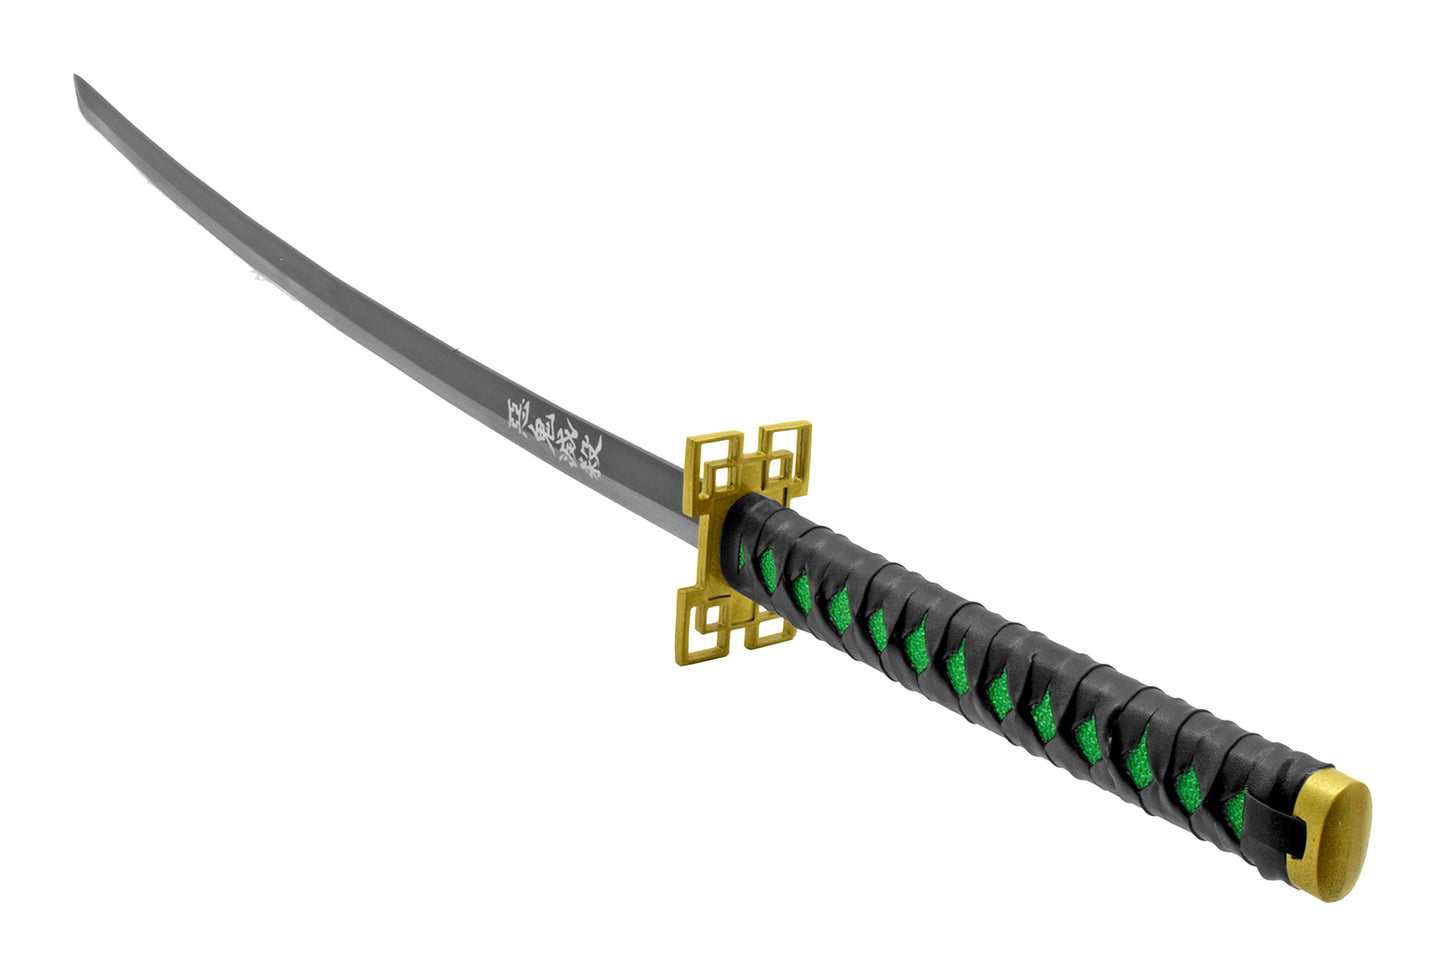 Demon Slayer Samurai Katana Sword - Green and Black